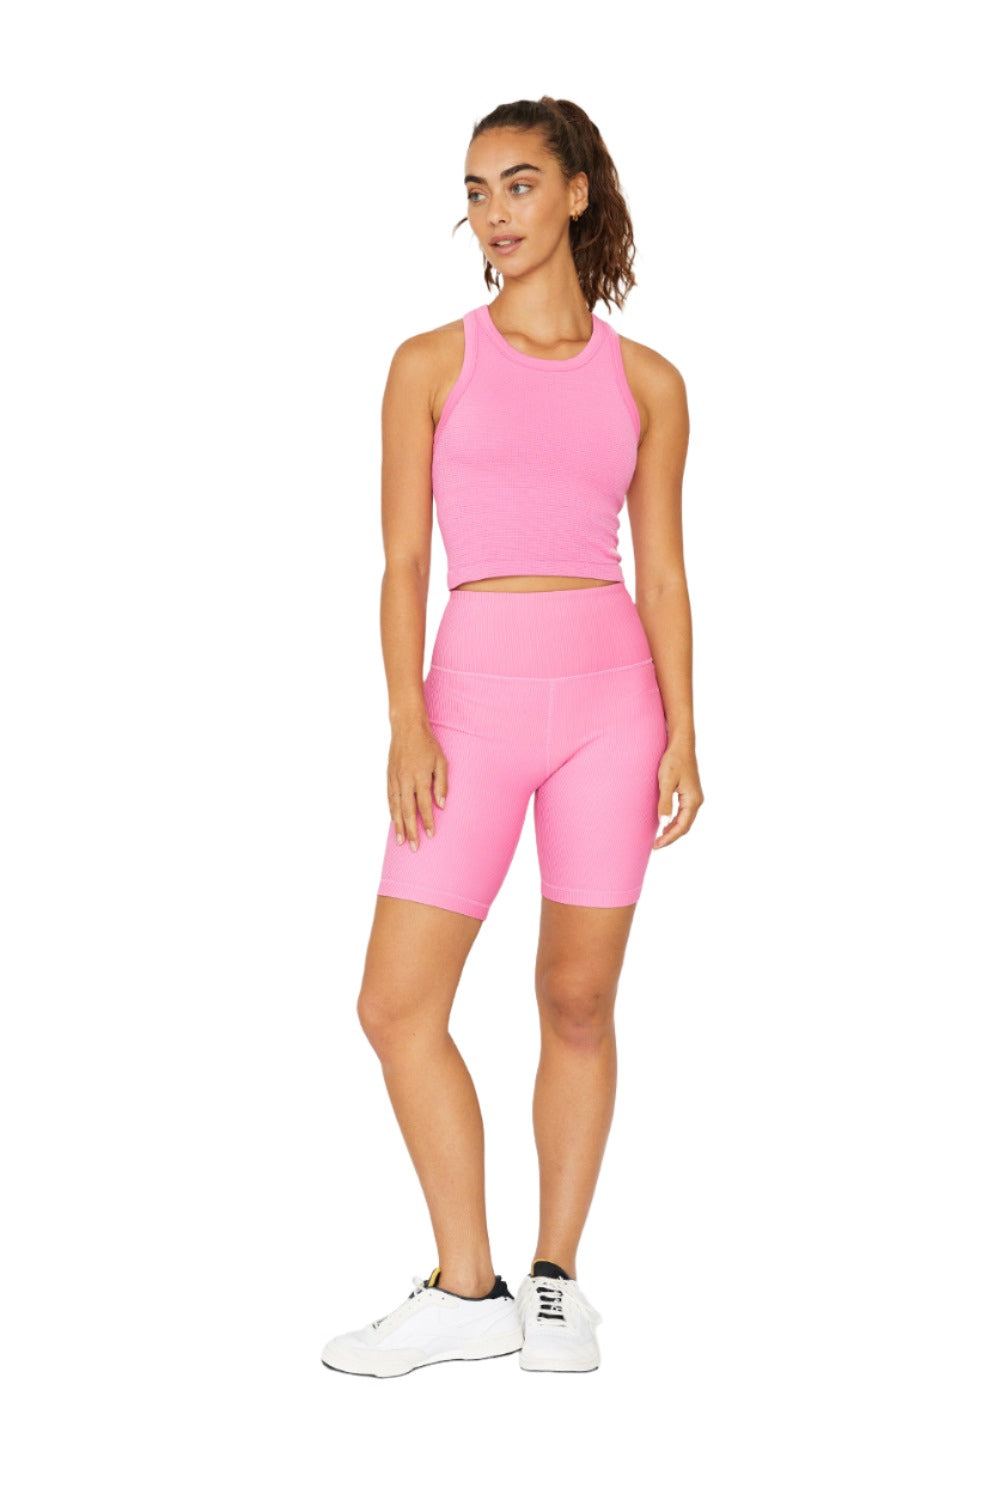 Cream Yoga Harper Biker Shorts 8" - Pink